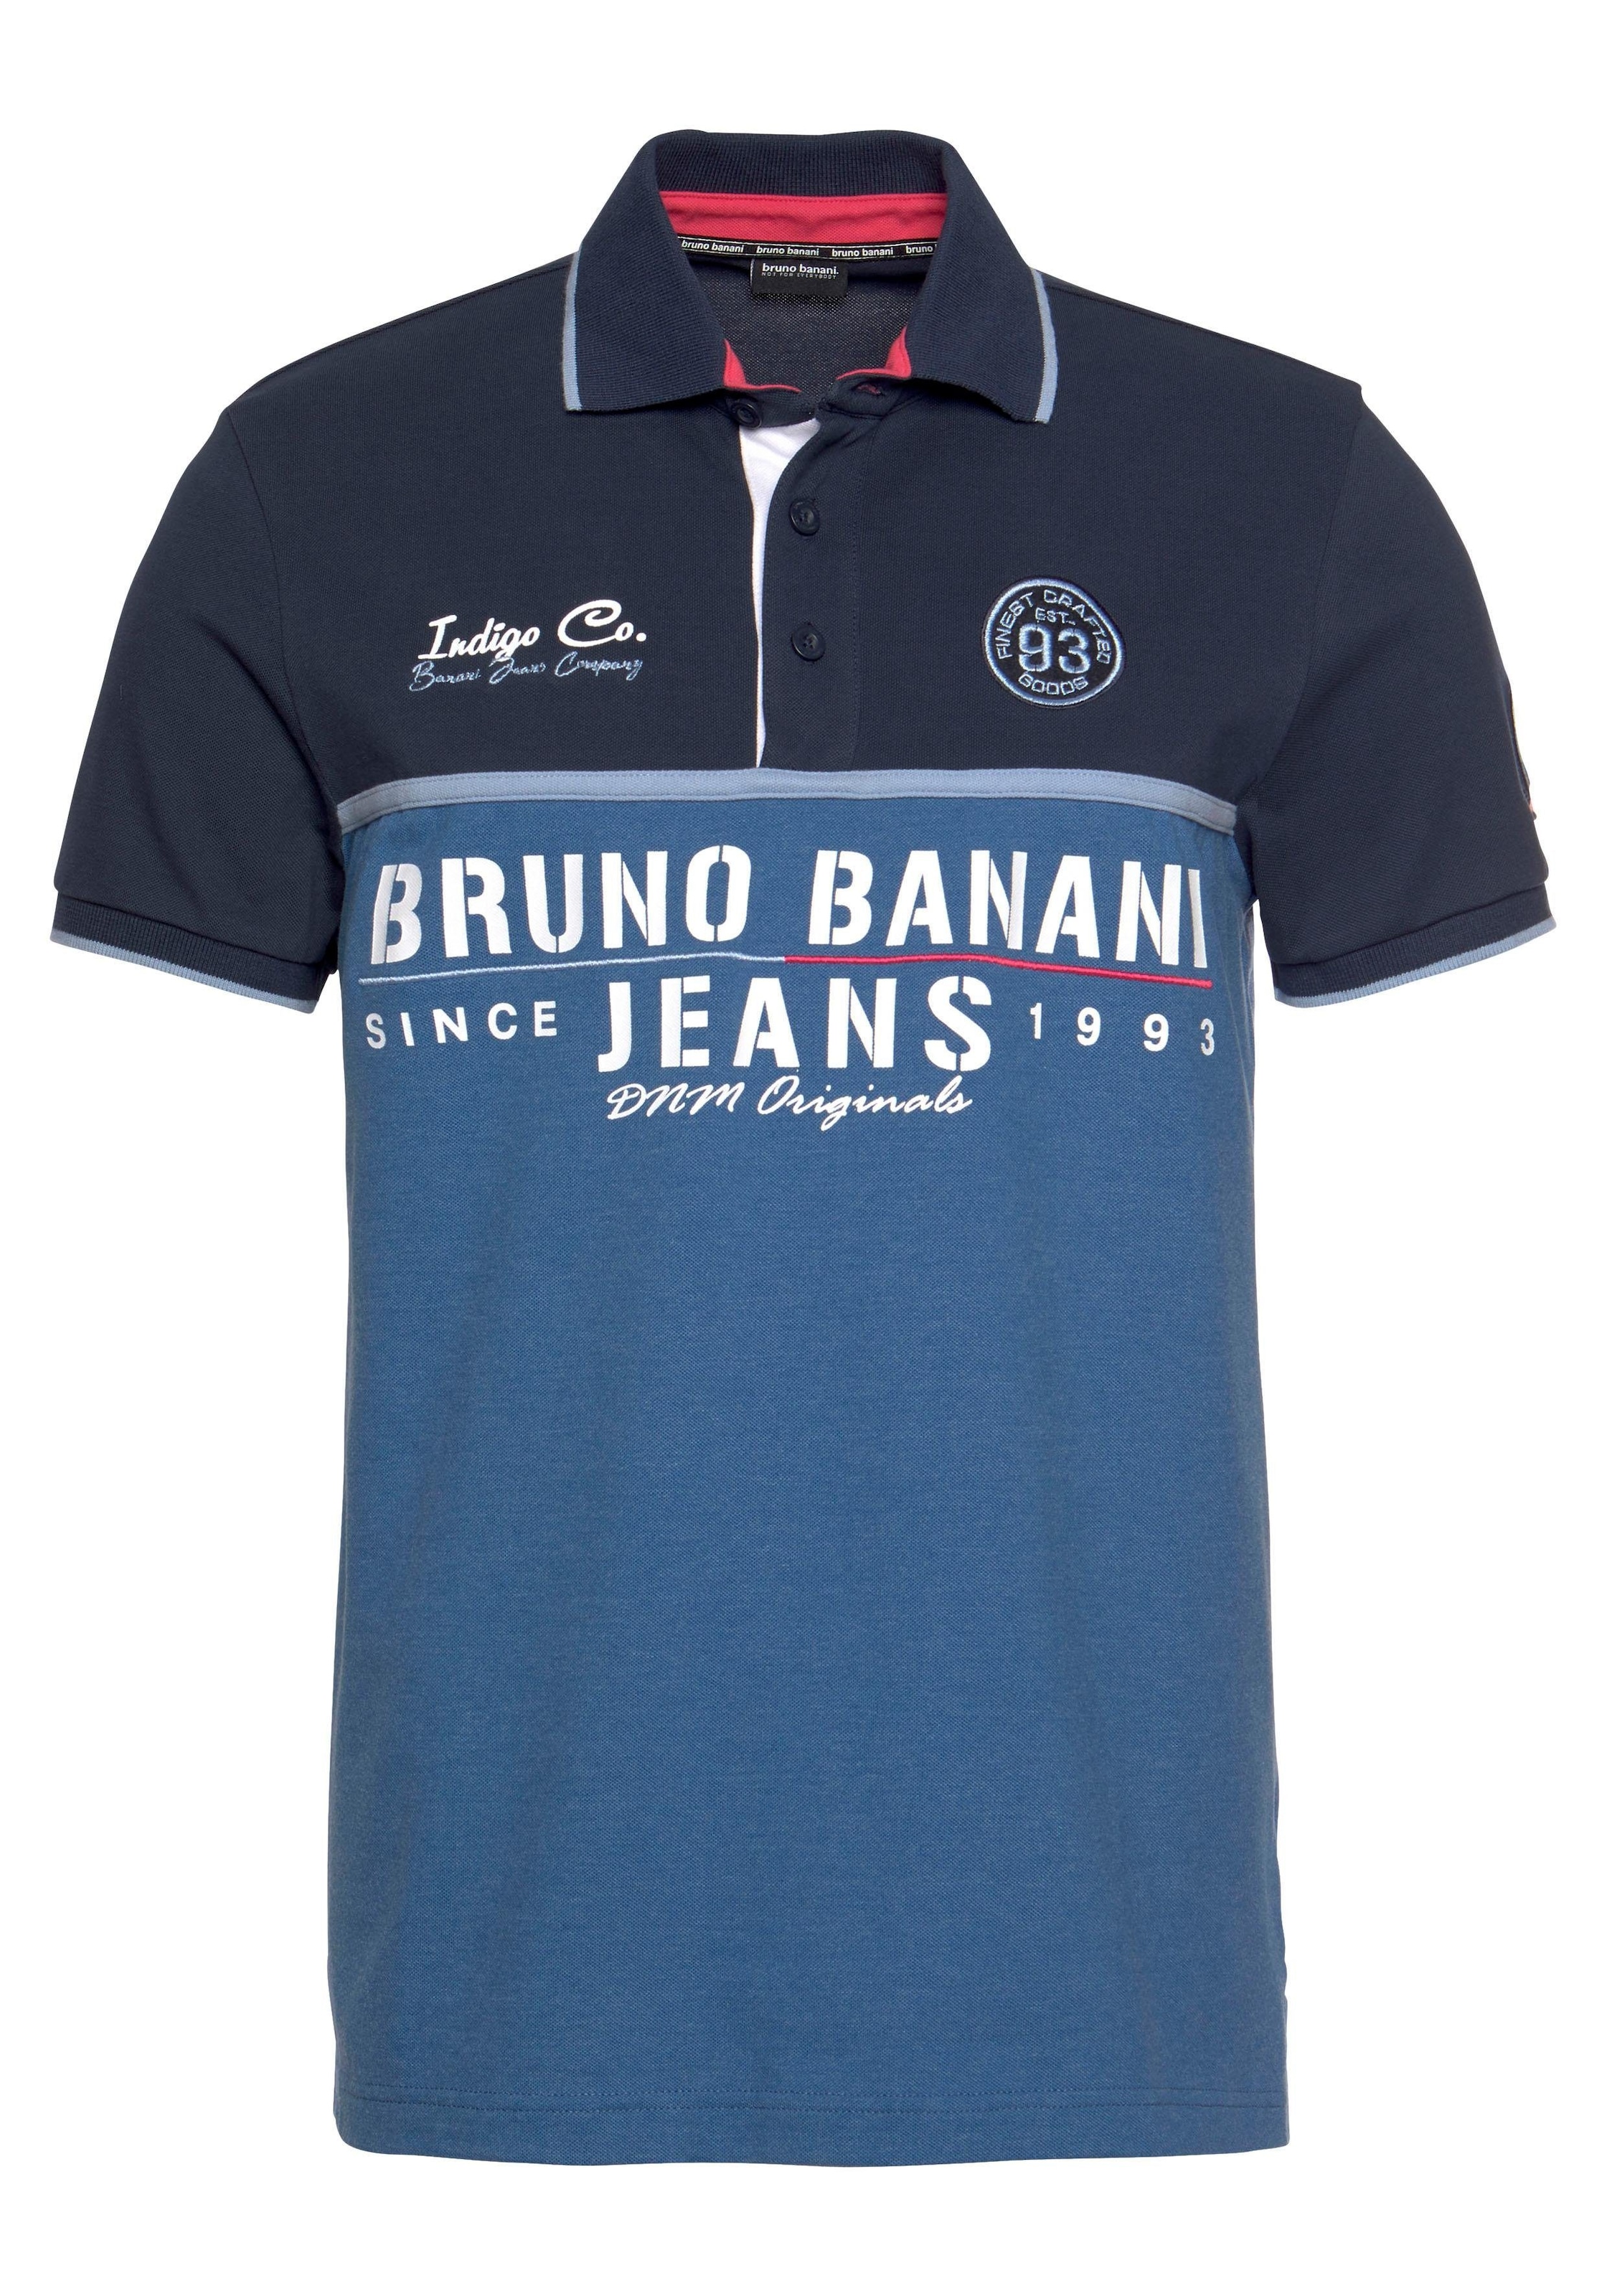 Bruno Banani Poloshirt, Piqué